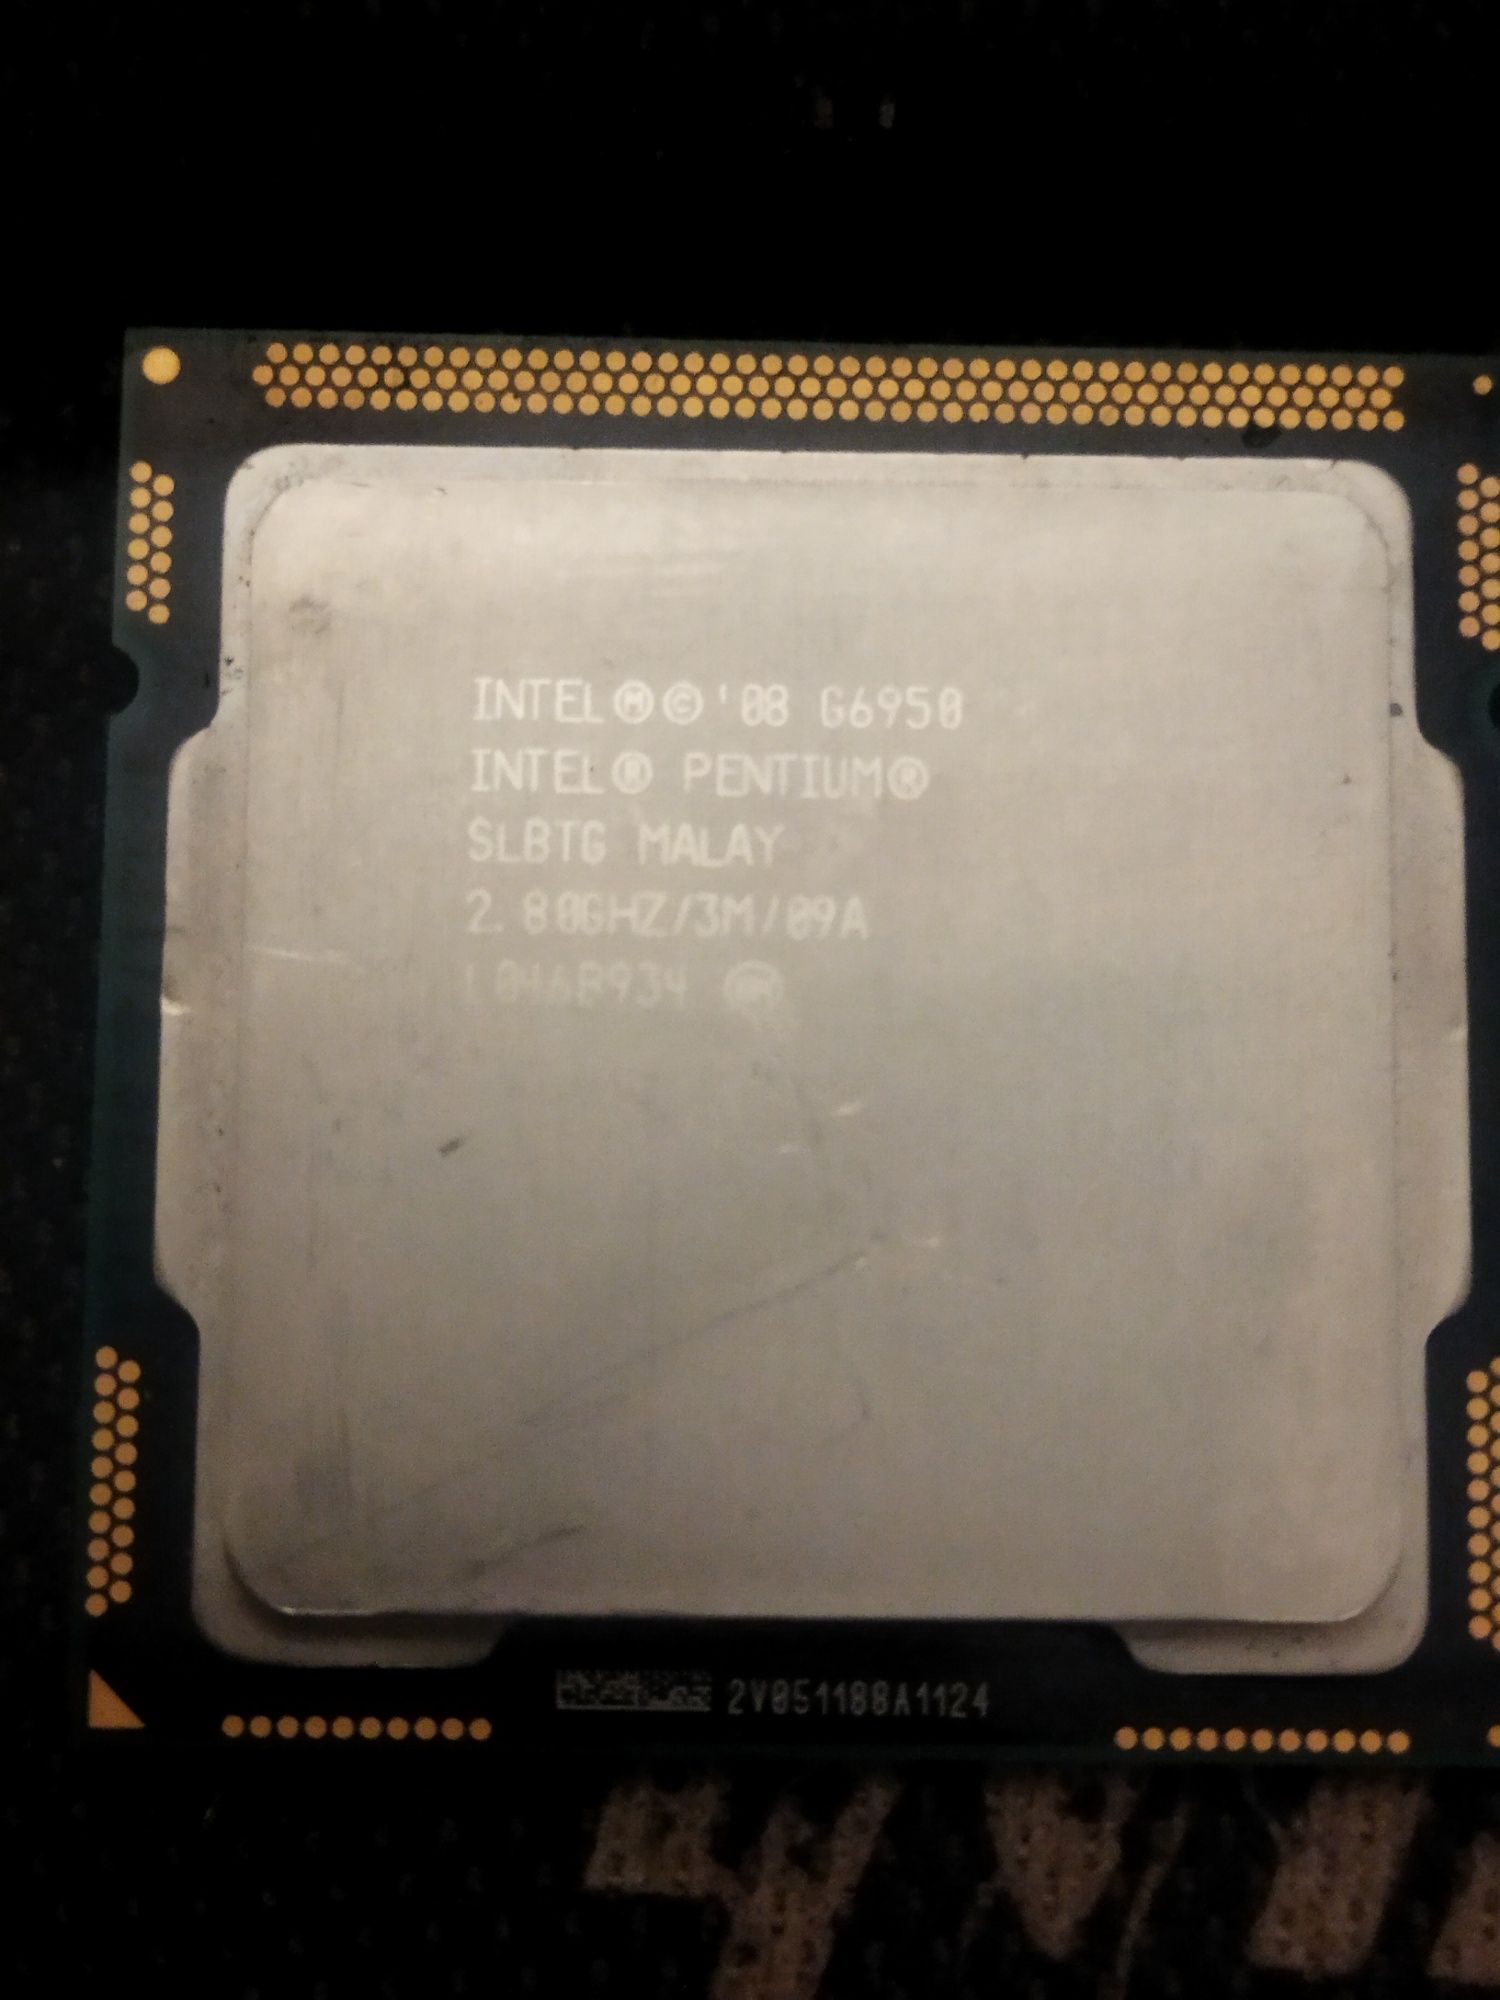 ntel Pentium G6950
2,8 ghz